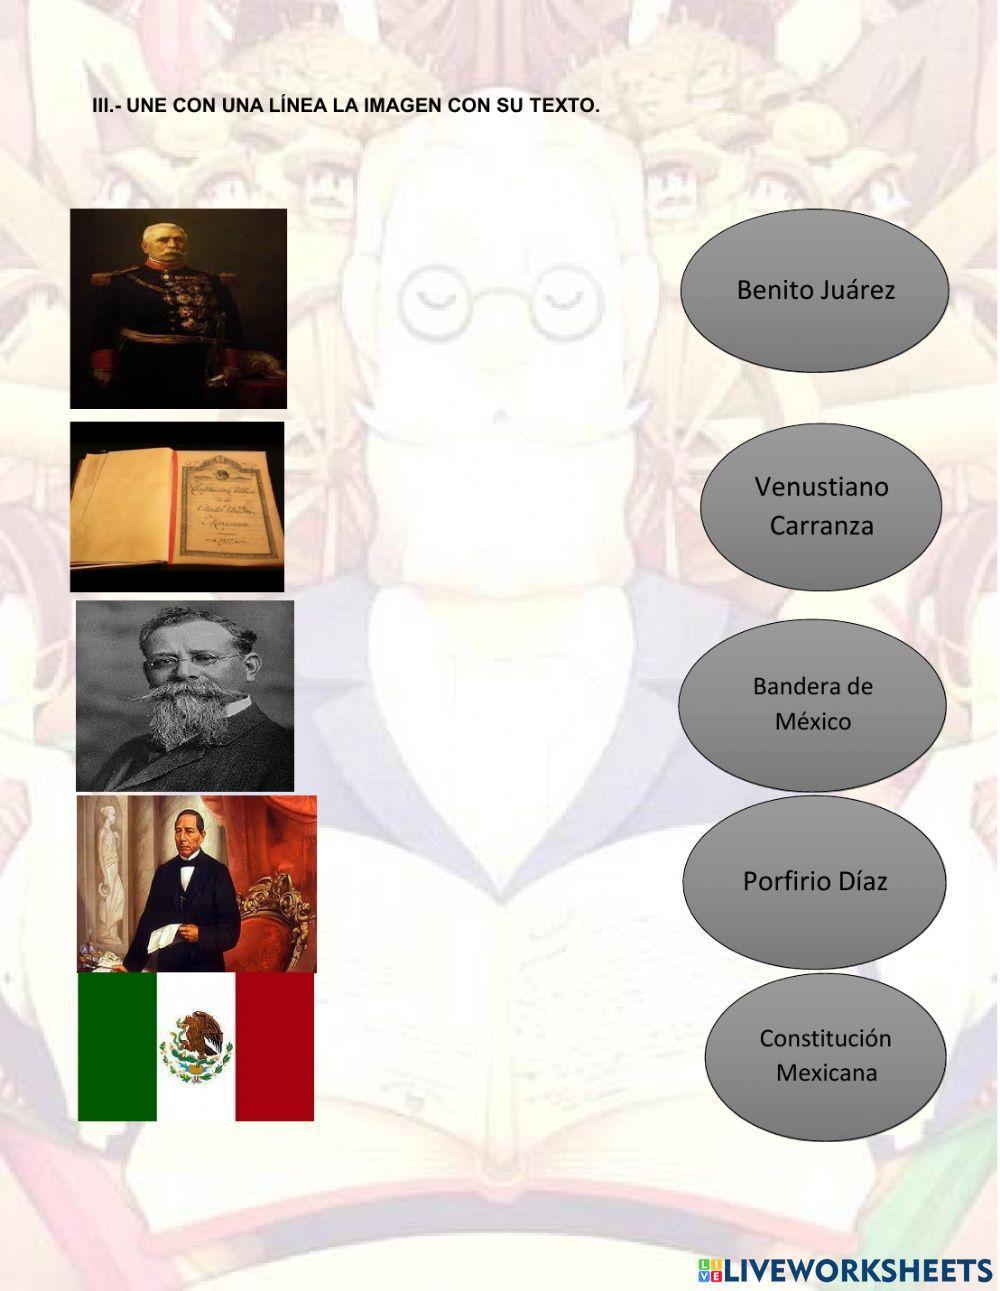 Constitucion mexicana